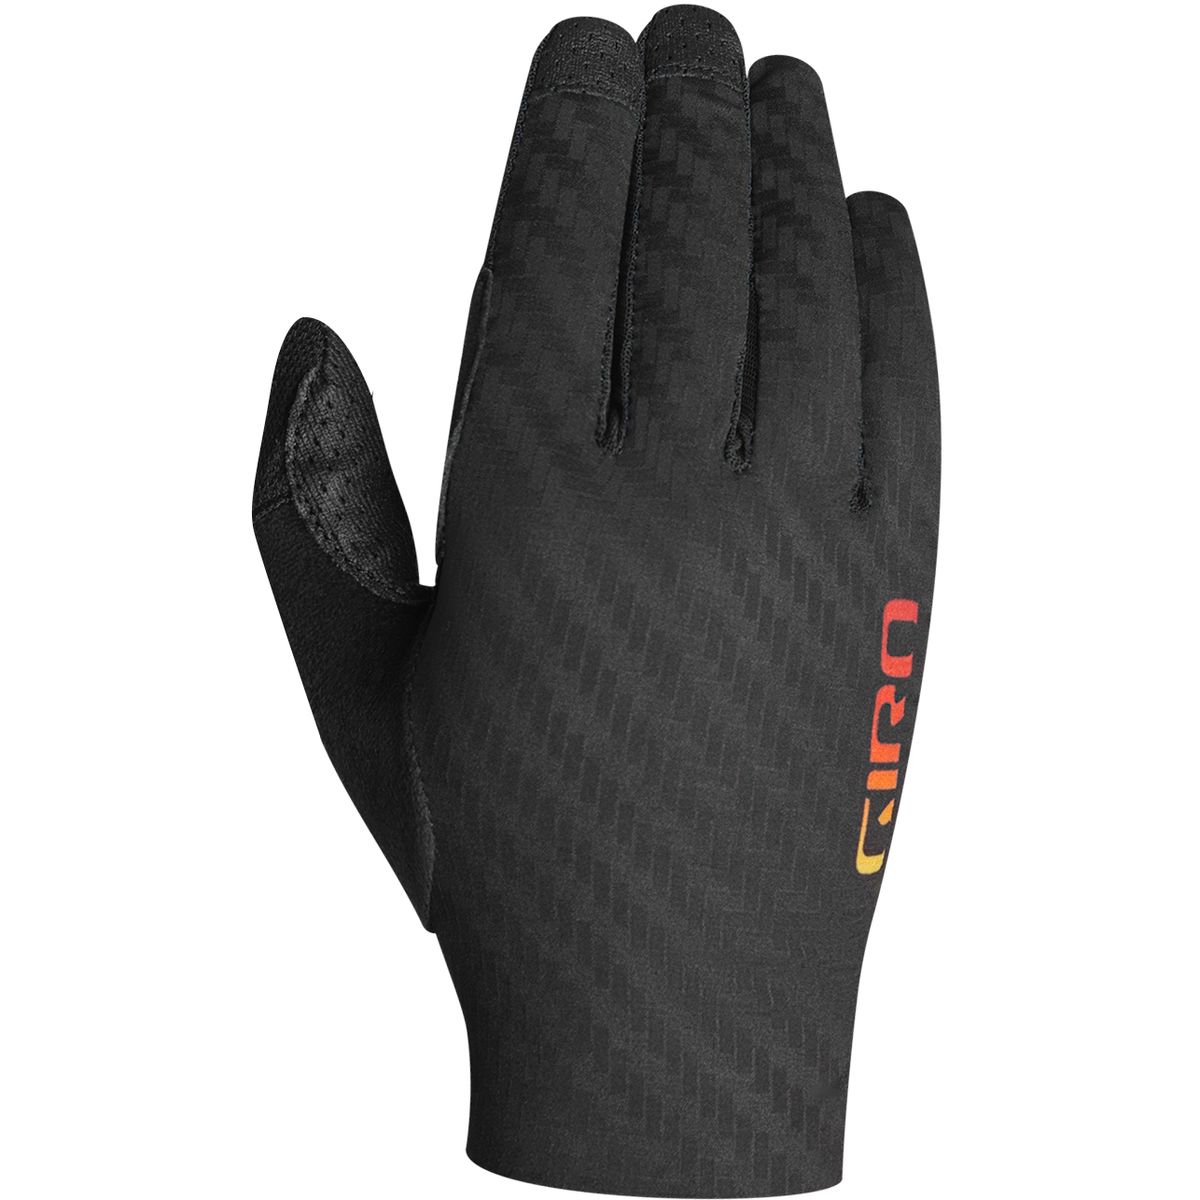 Giro Rivet CS Glove - Men's